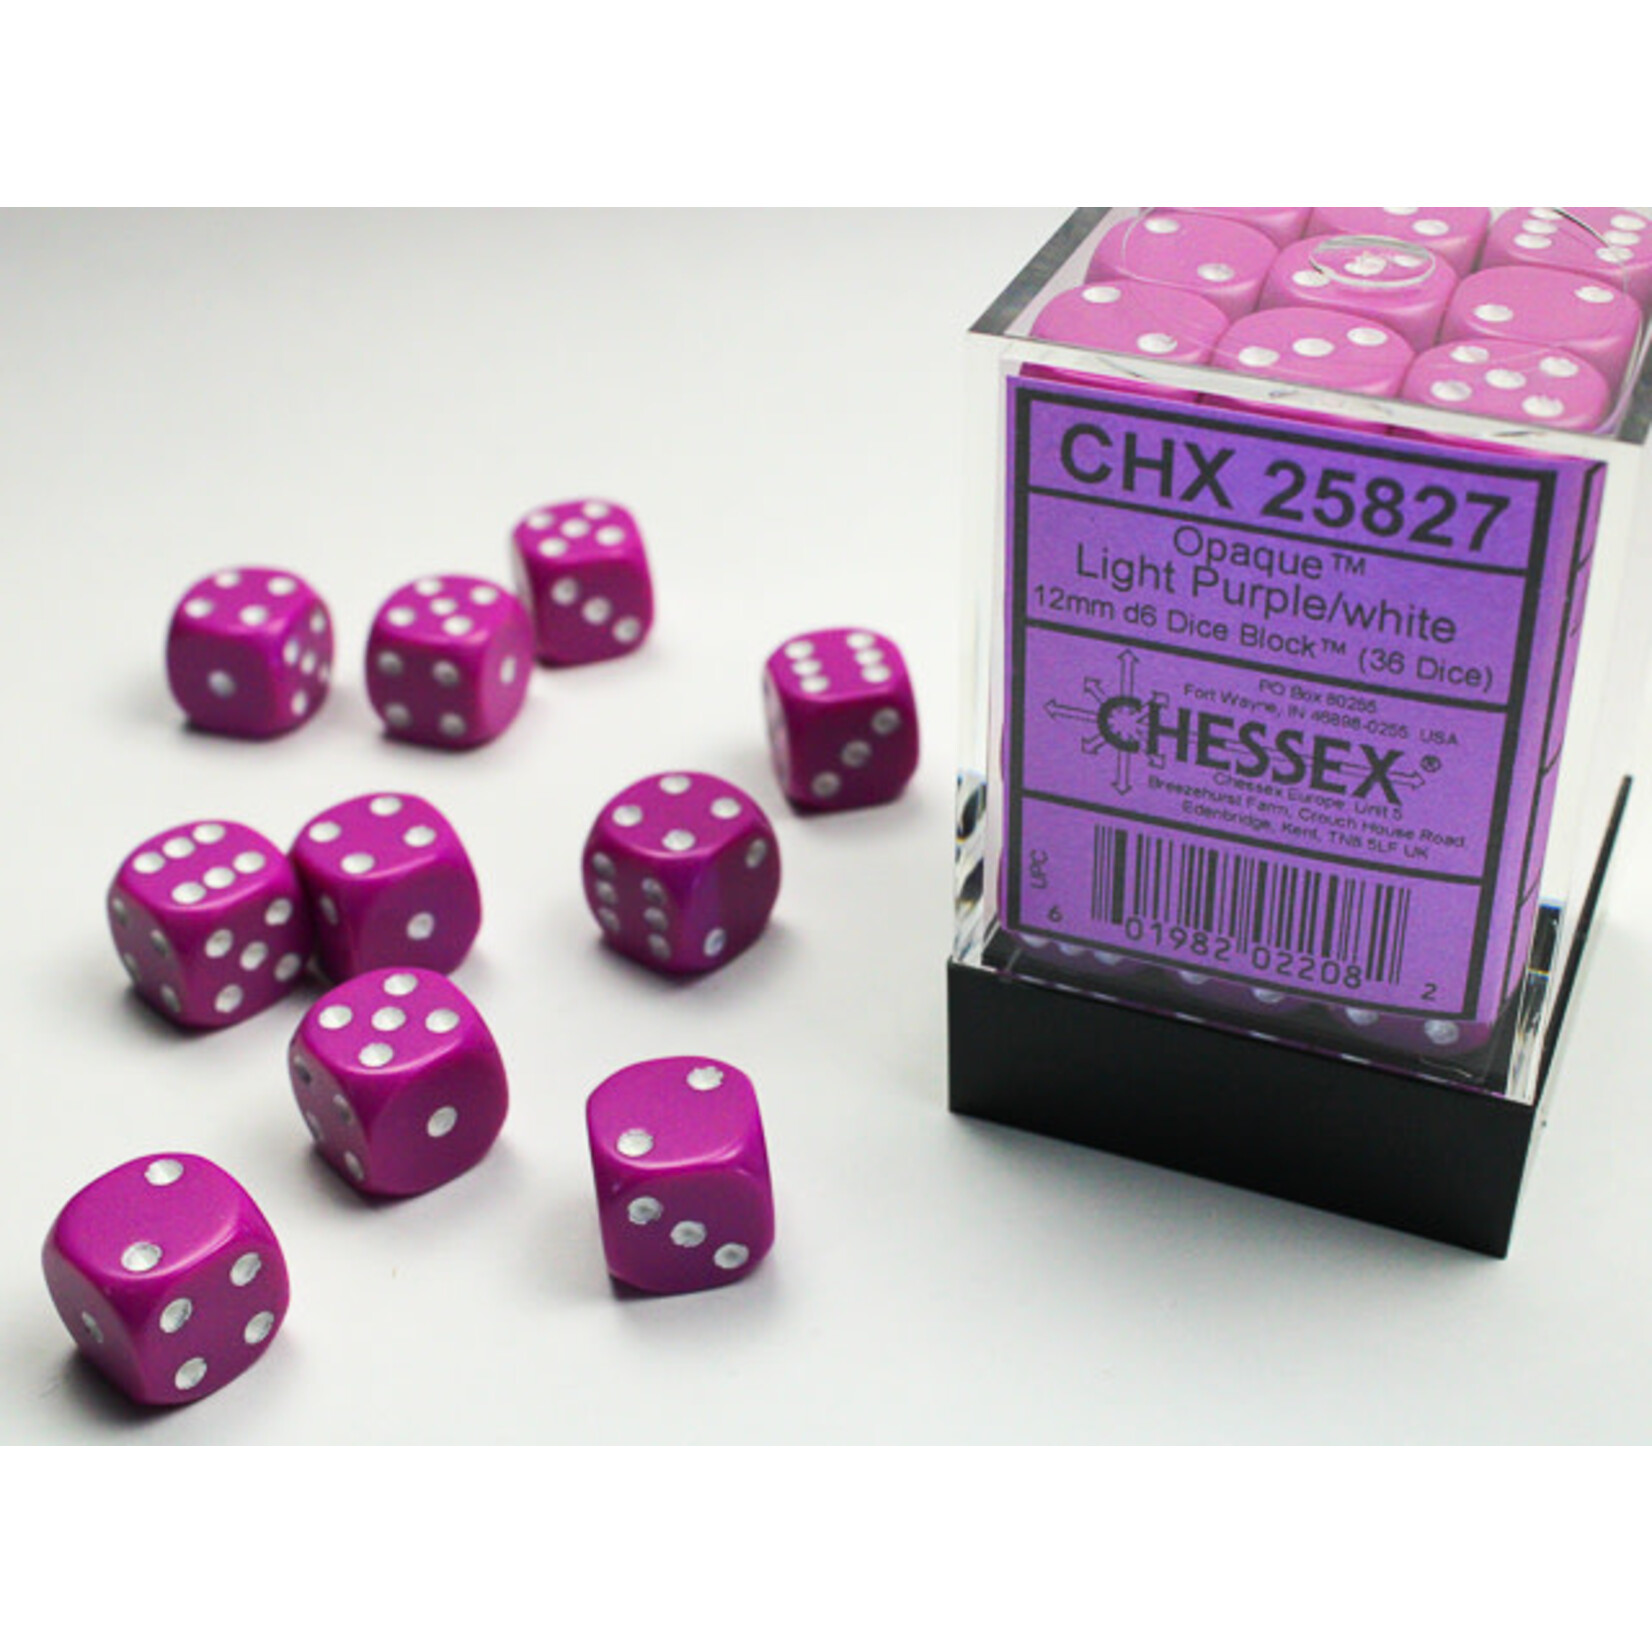 Chessex Opaque Light Purple/white 12mm d6 Dice Block (36 dice)